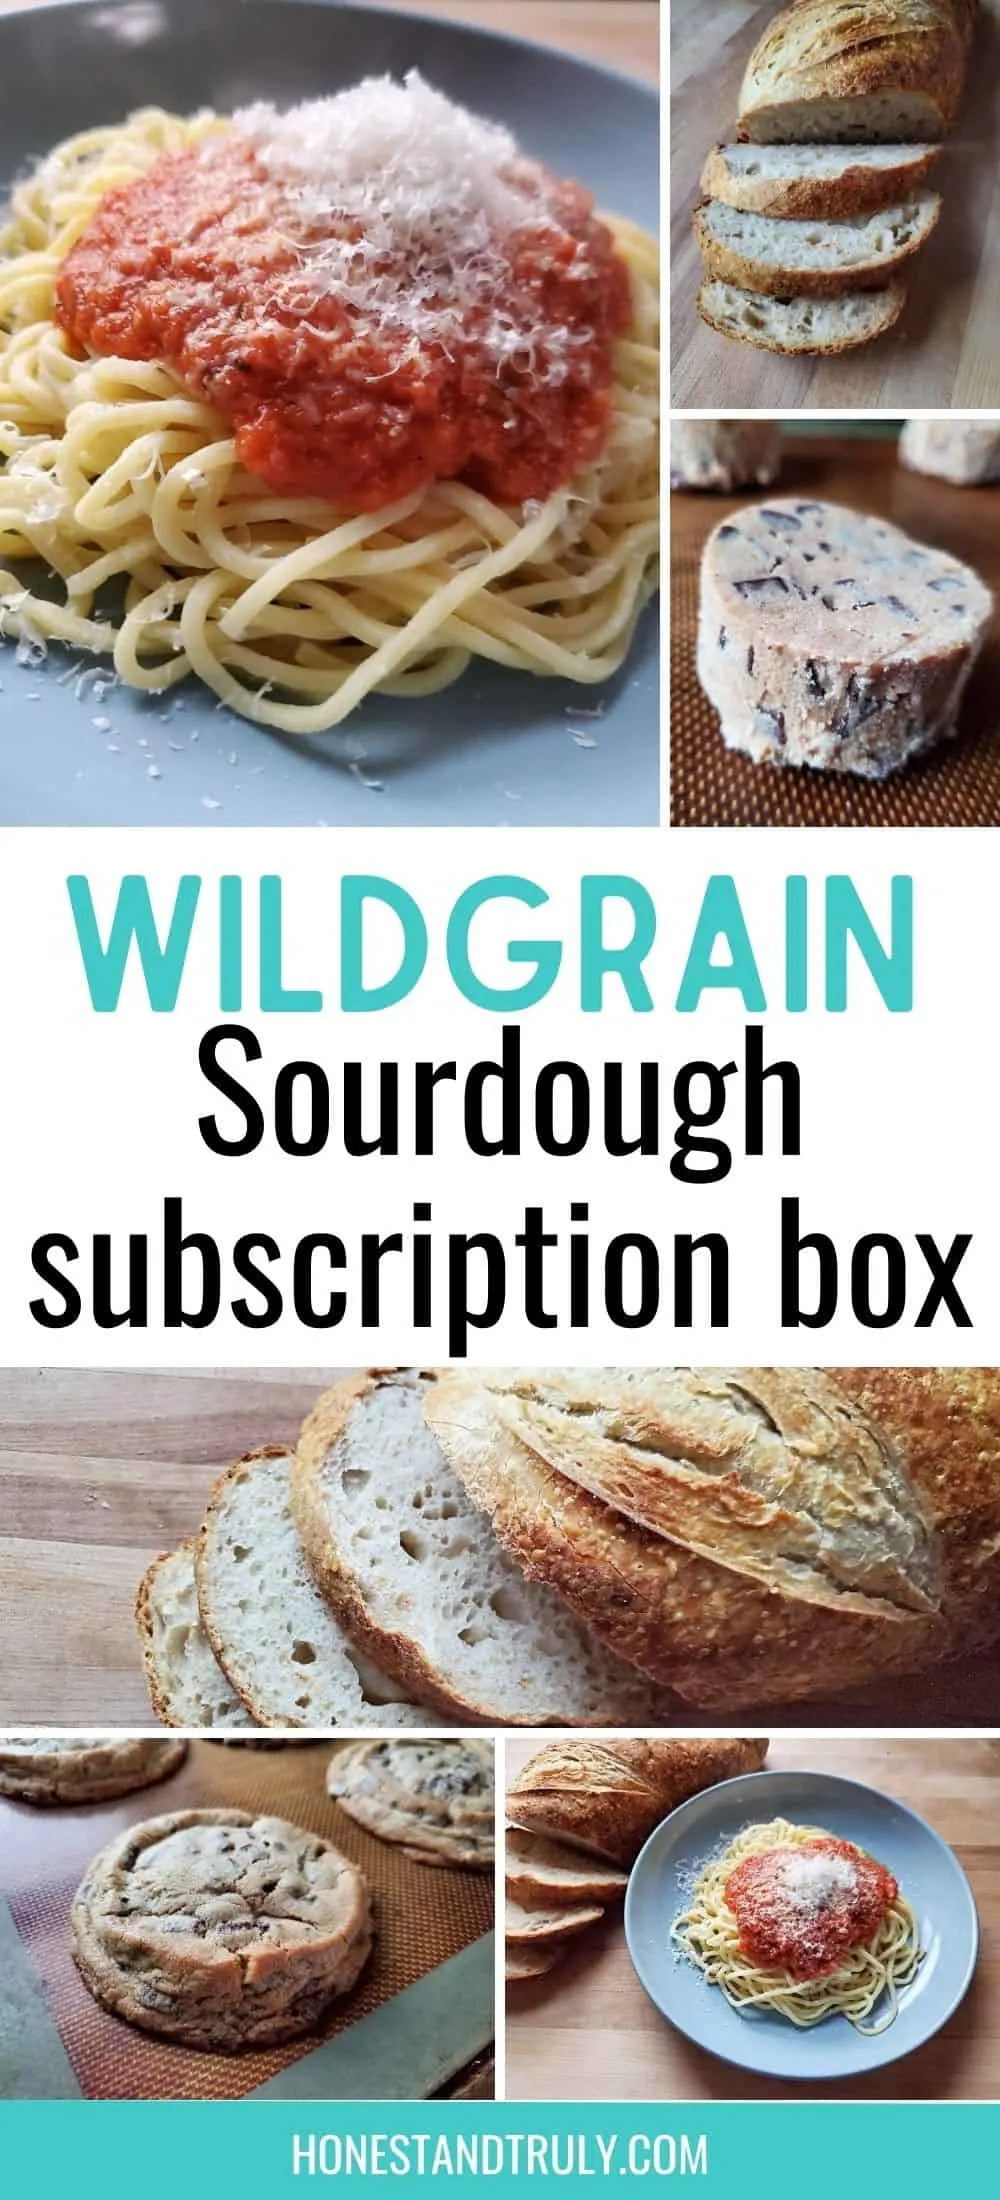 Collage of Wildgrain subscription box items with text wildgrain sourdough subscription box.